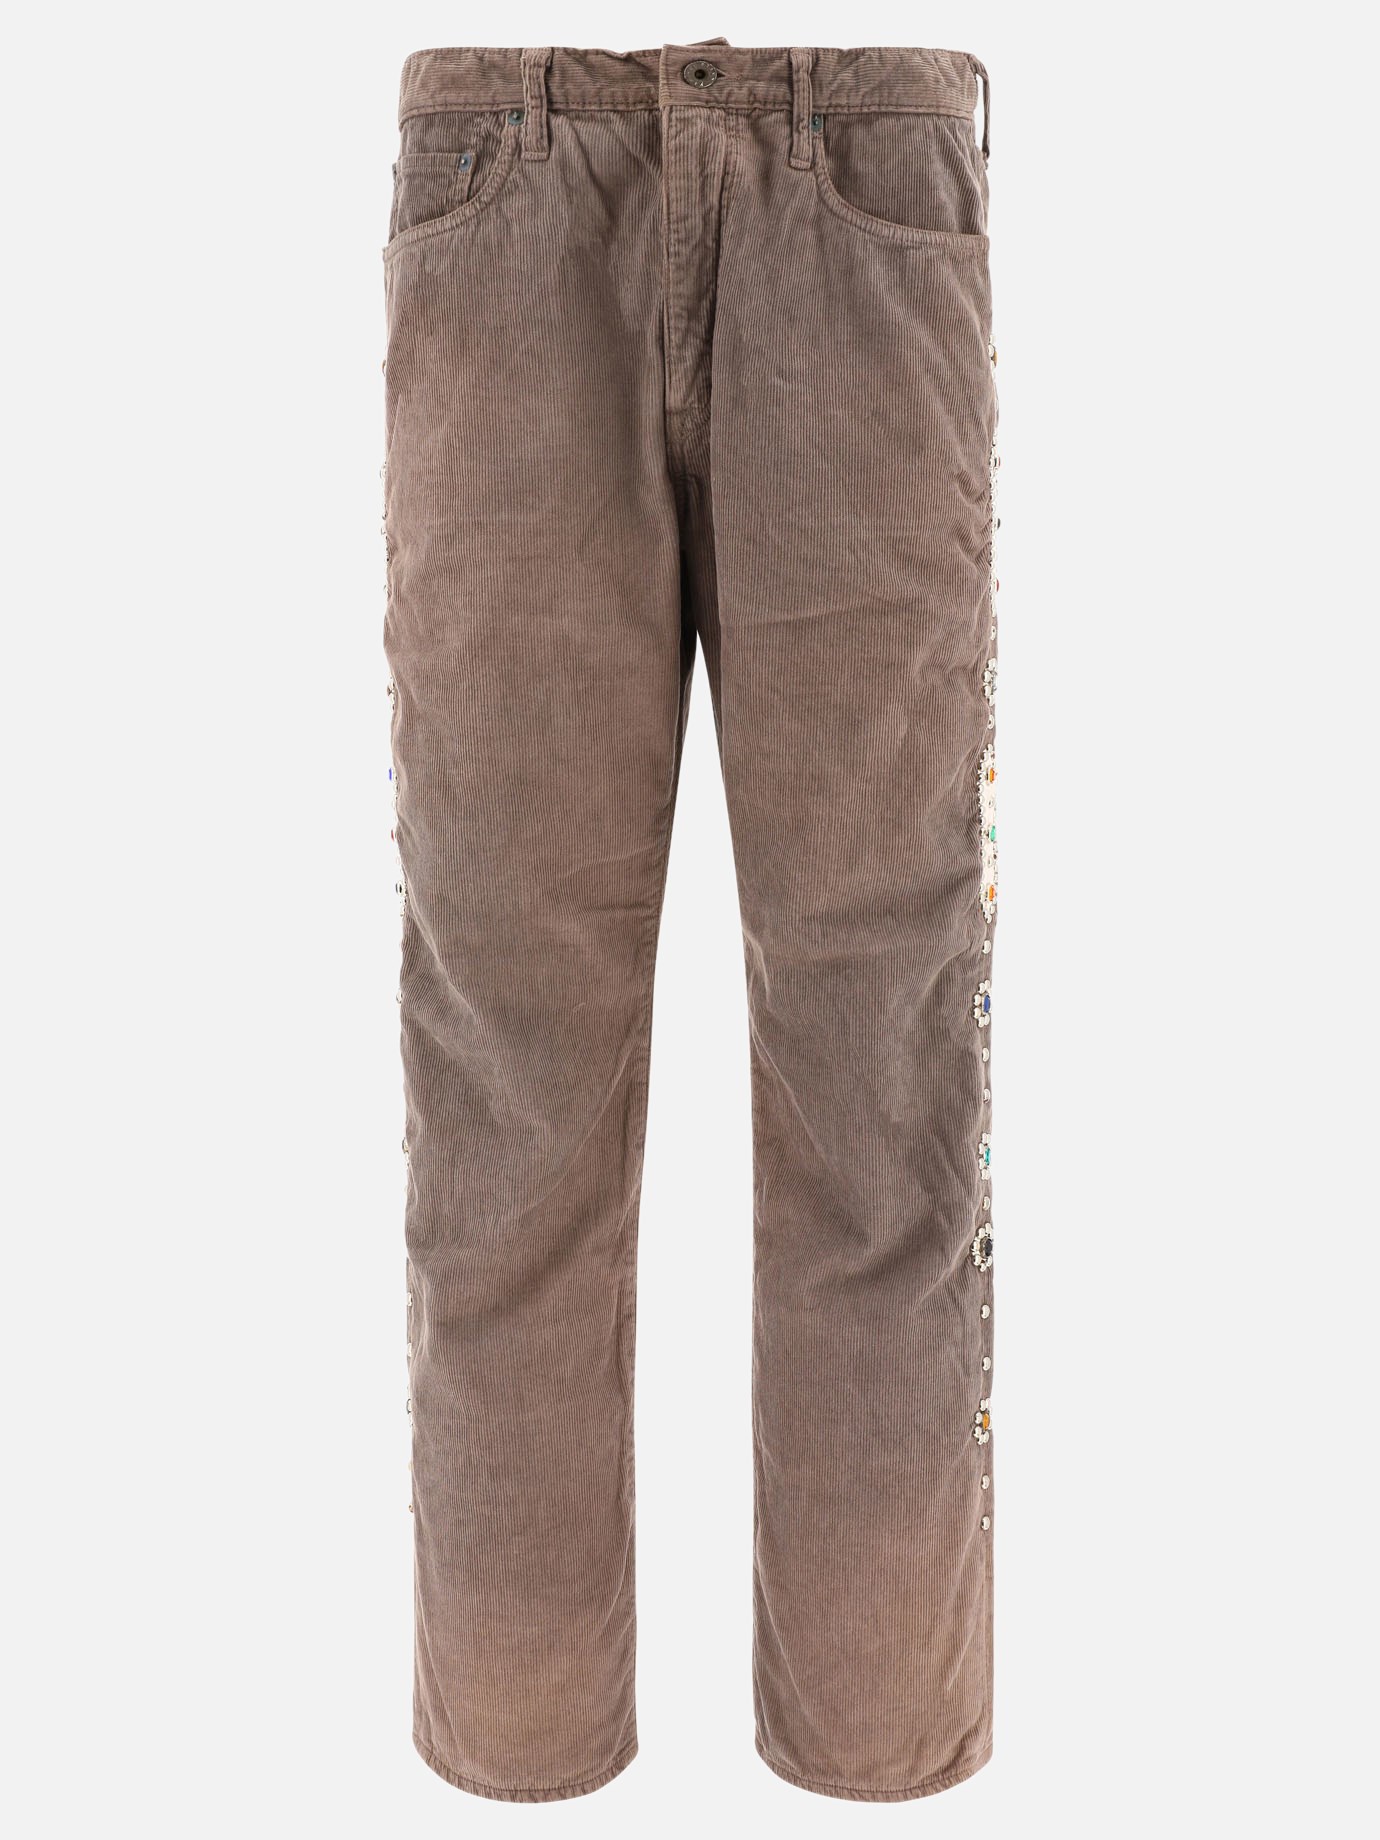 Corduroy trousers with rhinestonesby Kapital - 2